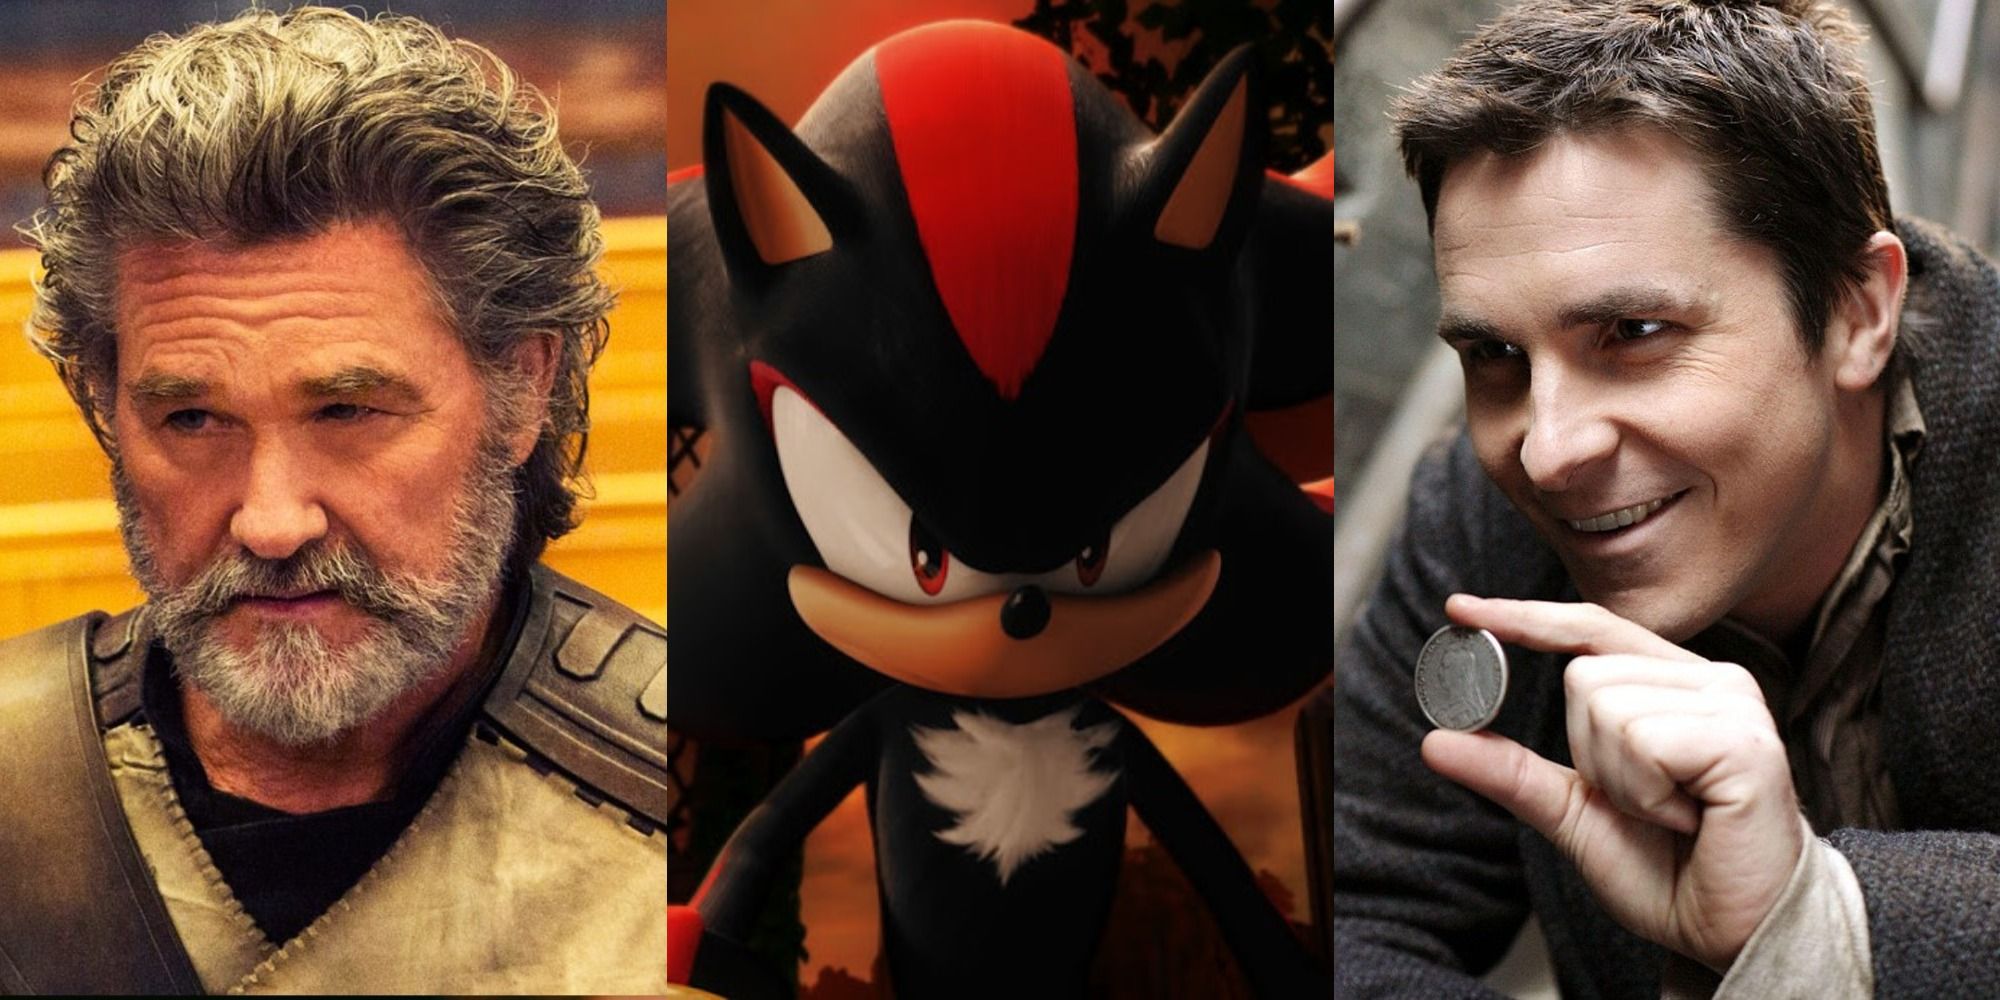 Shadow The Hedgehog Fan Casting for Sonic The Hedgehog 3 (2023)